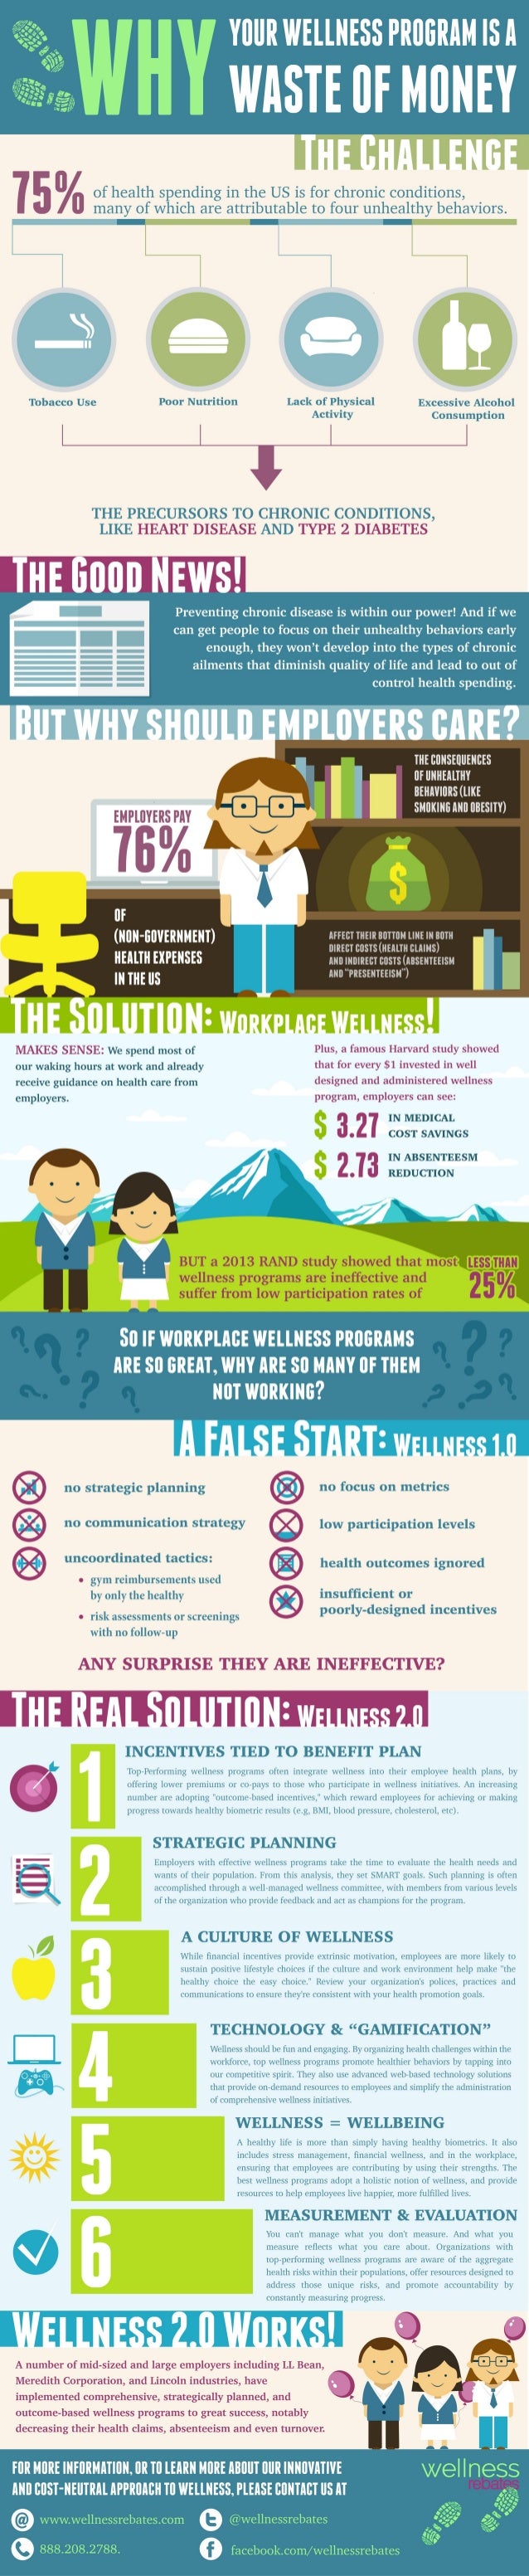 wellnessrebates-wellness-2-0-infographic